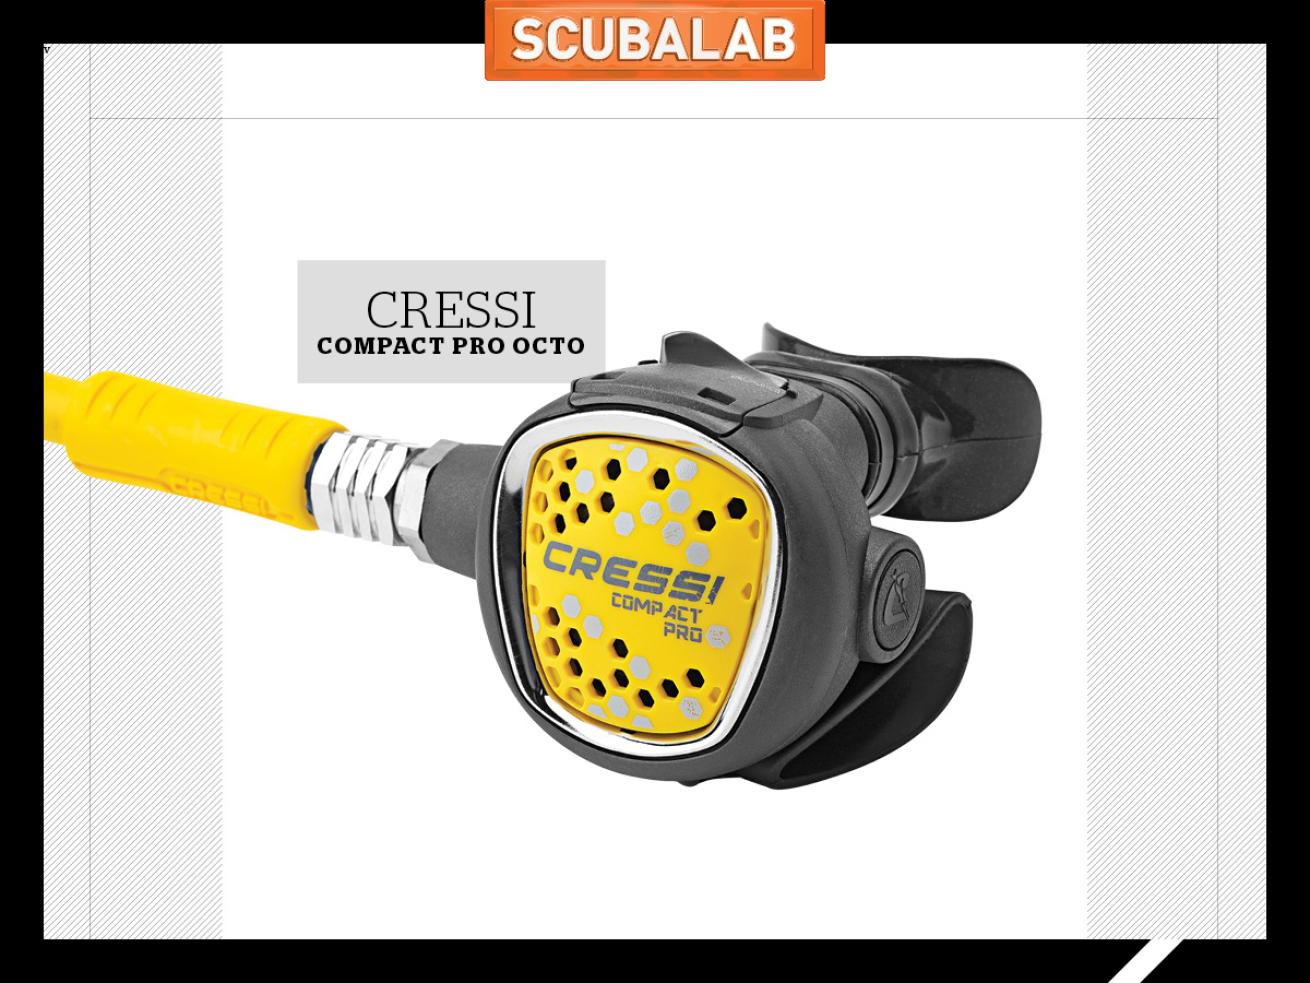 Cressi Compact Pro octo scuba diving alternate second stage regulator